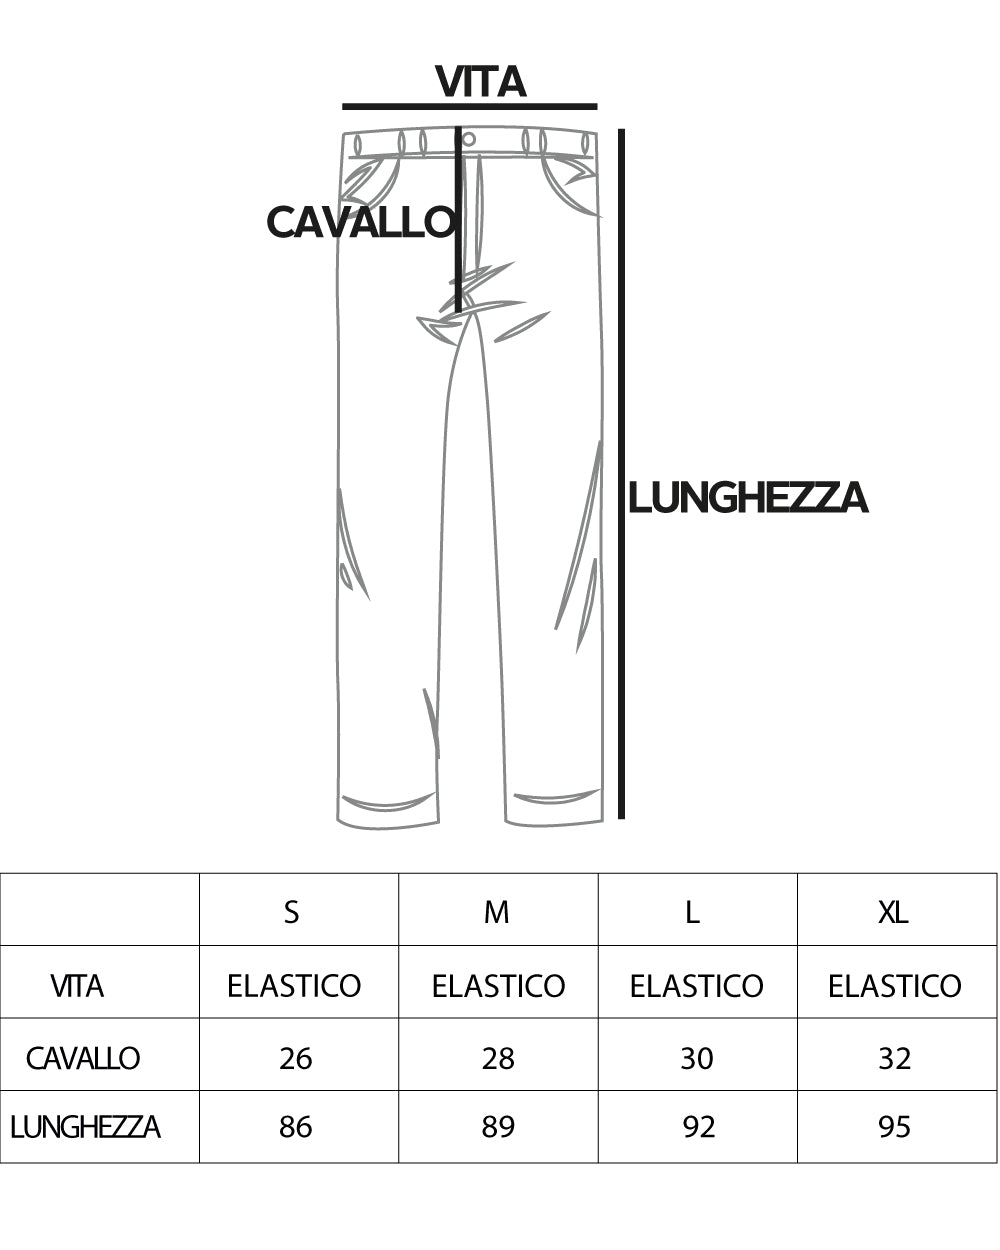 Pantaloni Jeans Uomo Loose Fit Denim Con Stampa Pantalaccio Casual GIOSAL-P5283A